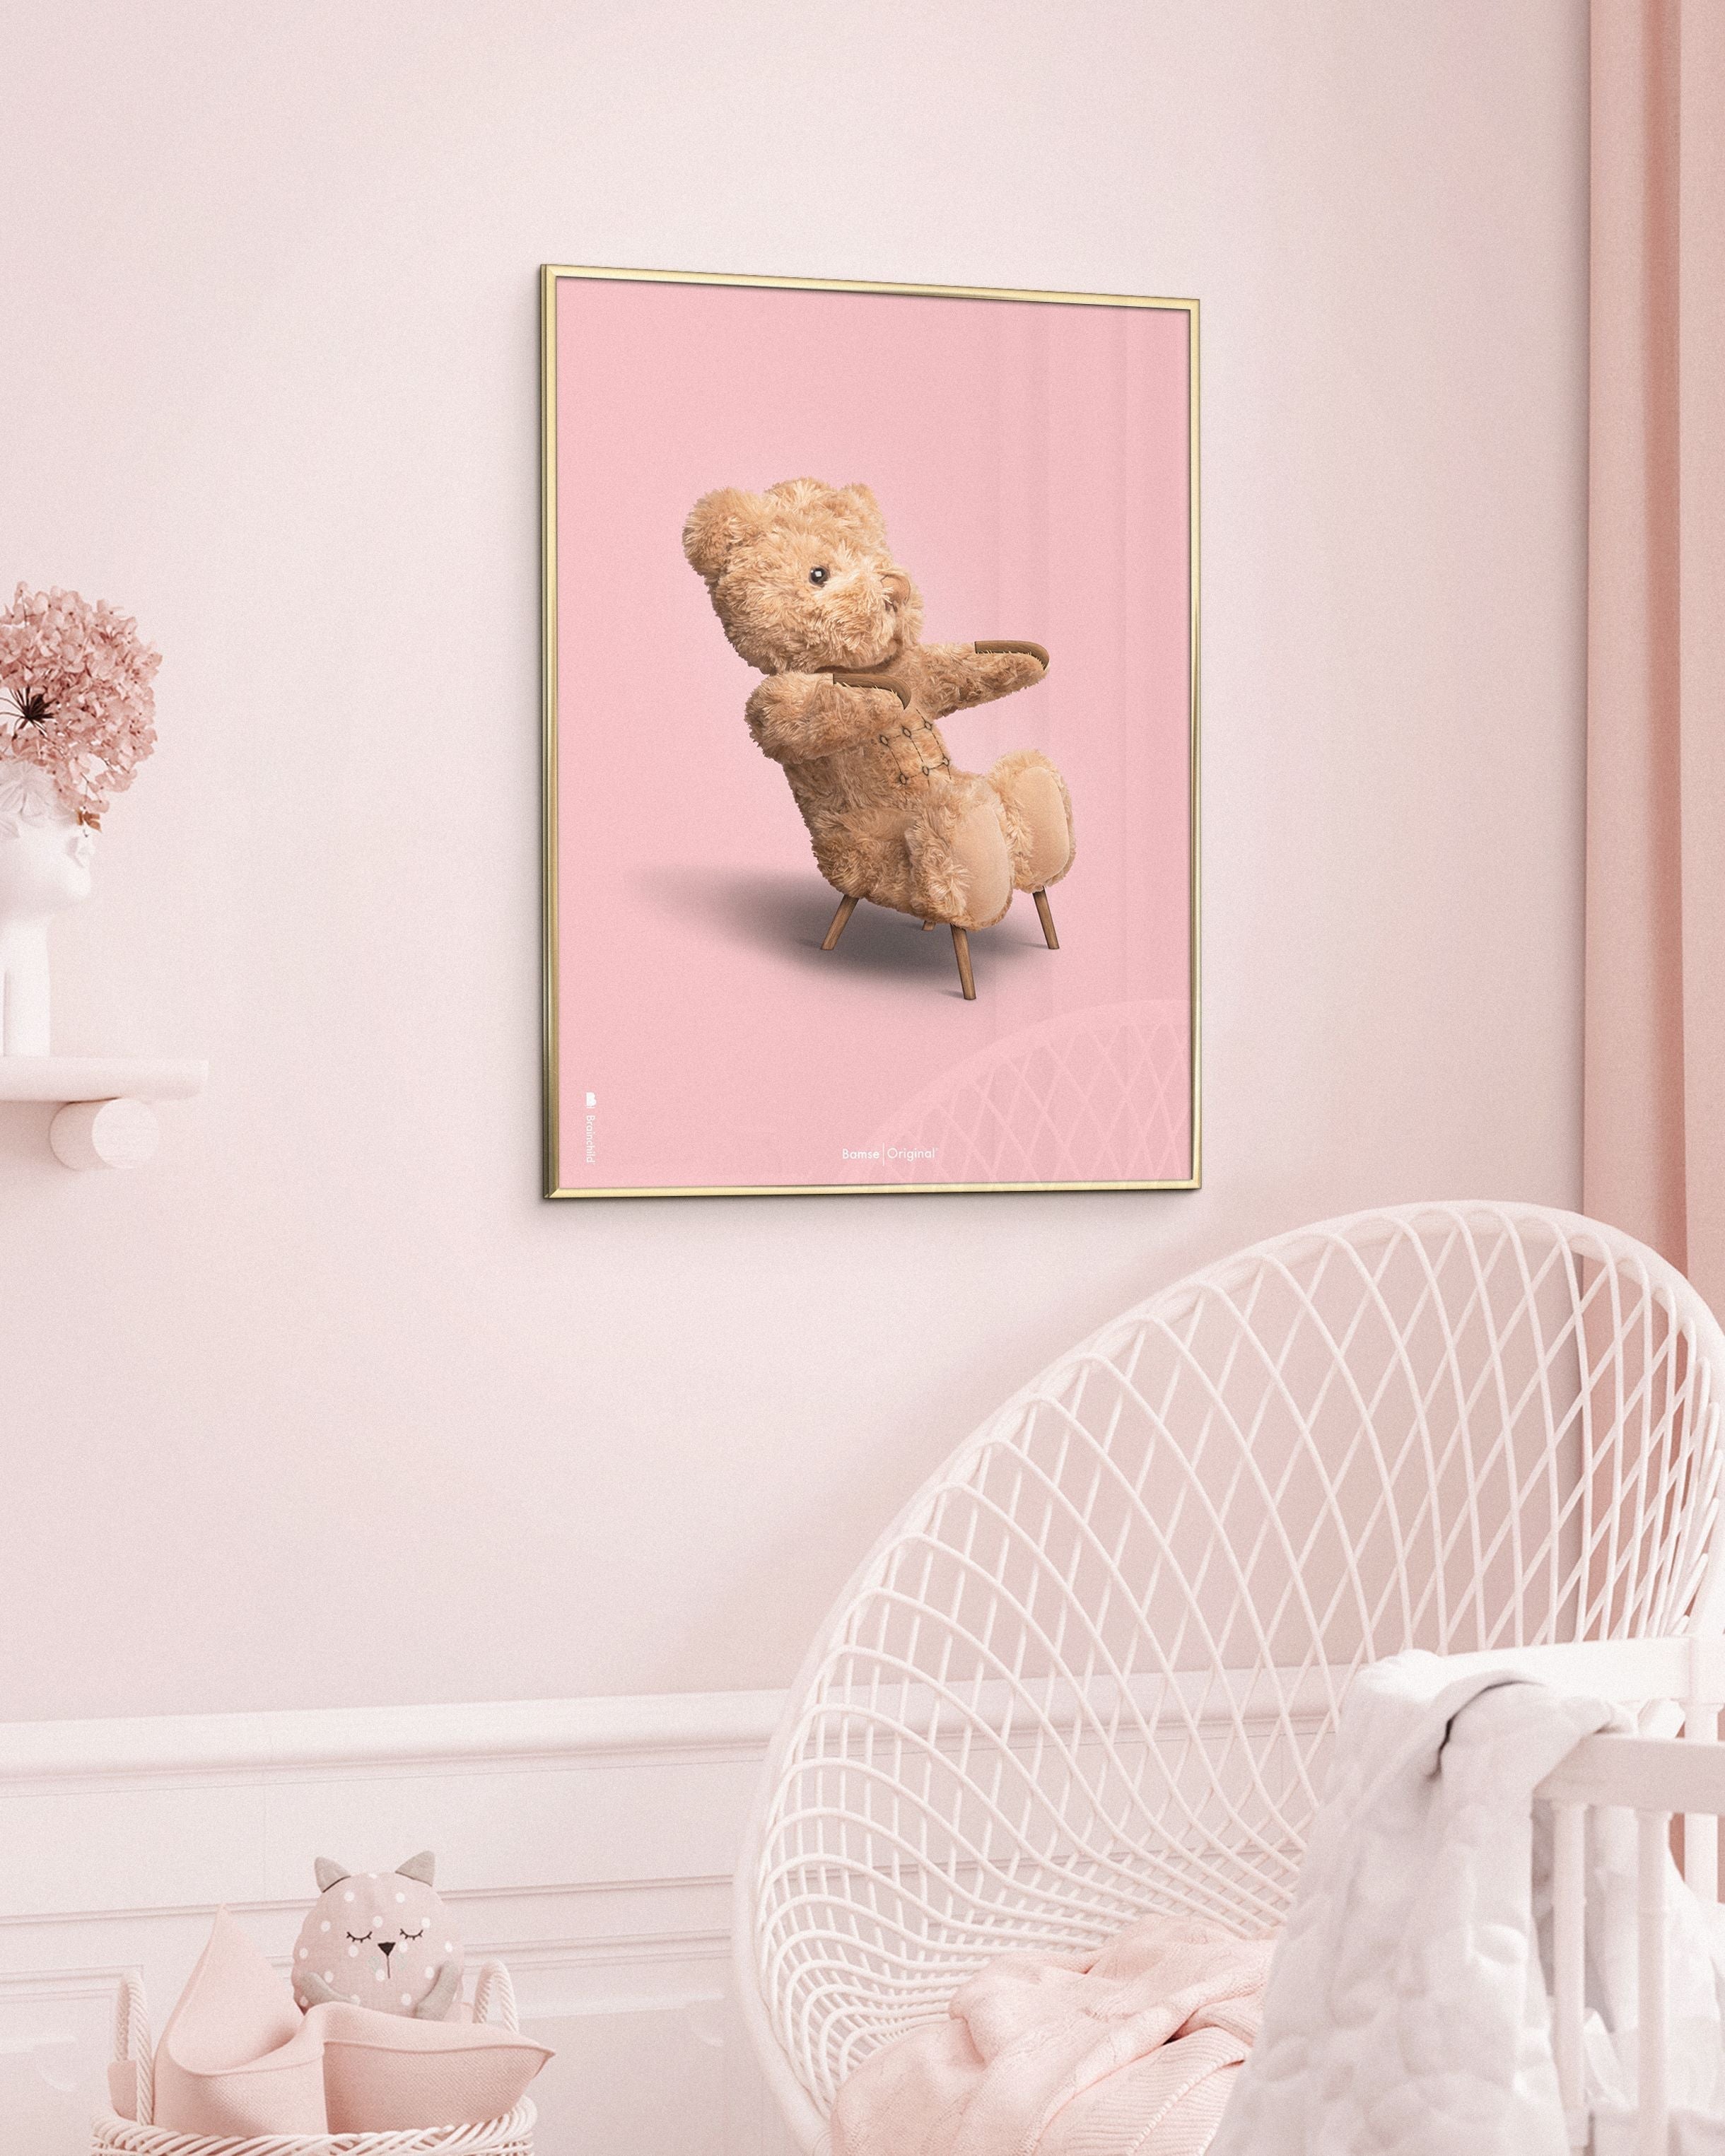 Brainchild Teddybeer klassieke poster messing gekleurd frame A5, roze achtergrond